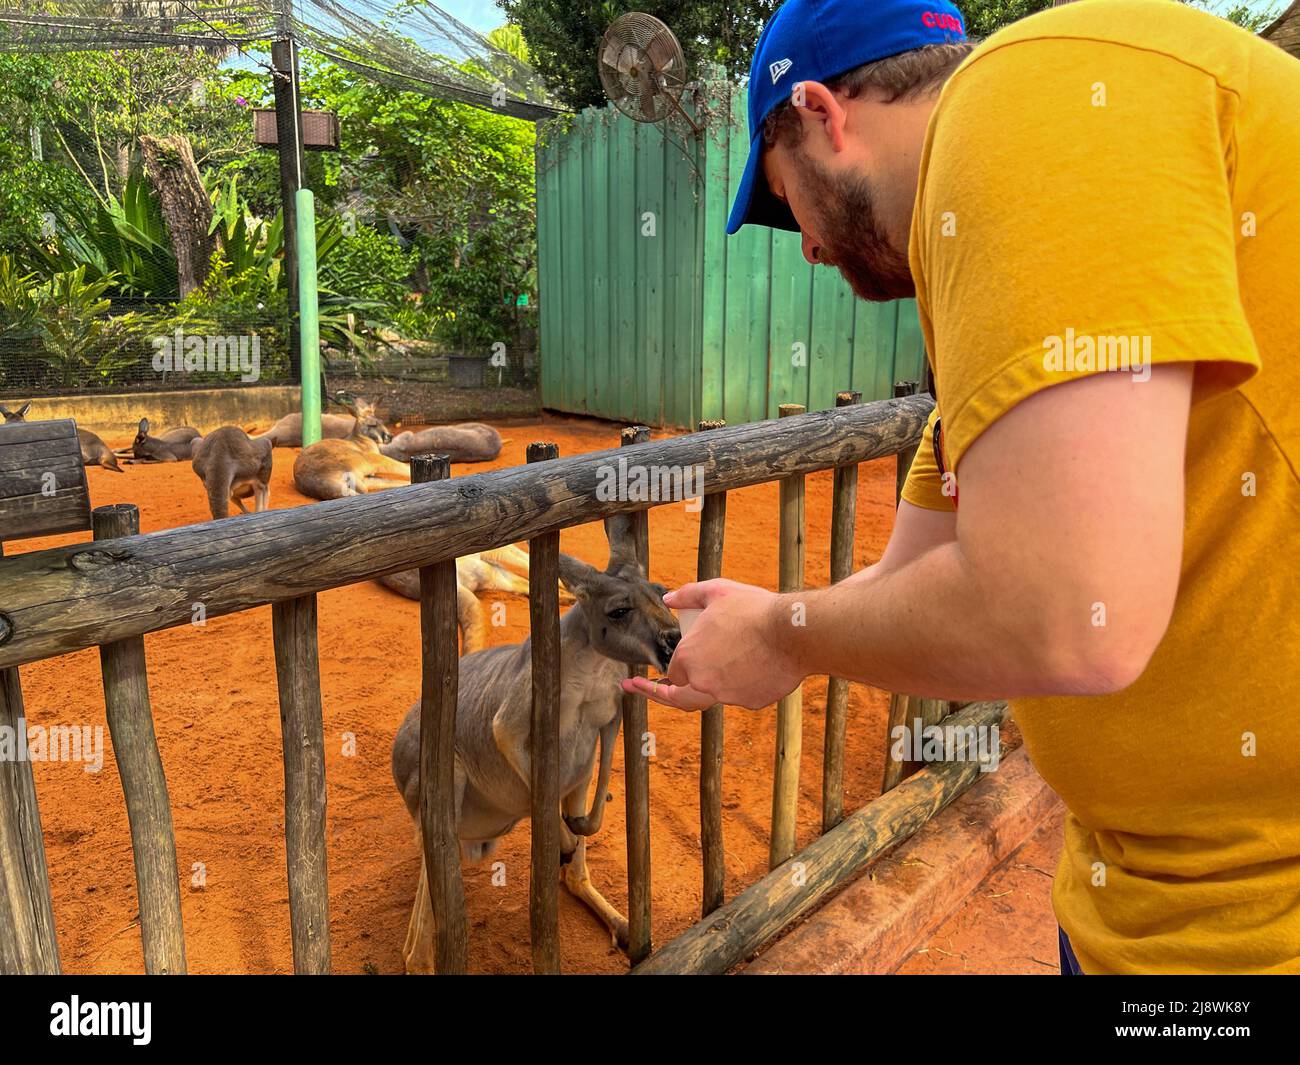 A person feeding a cute hungry kangaroo at a zoo. Stock Photo